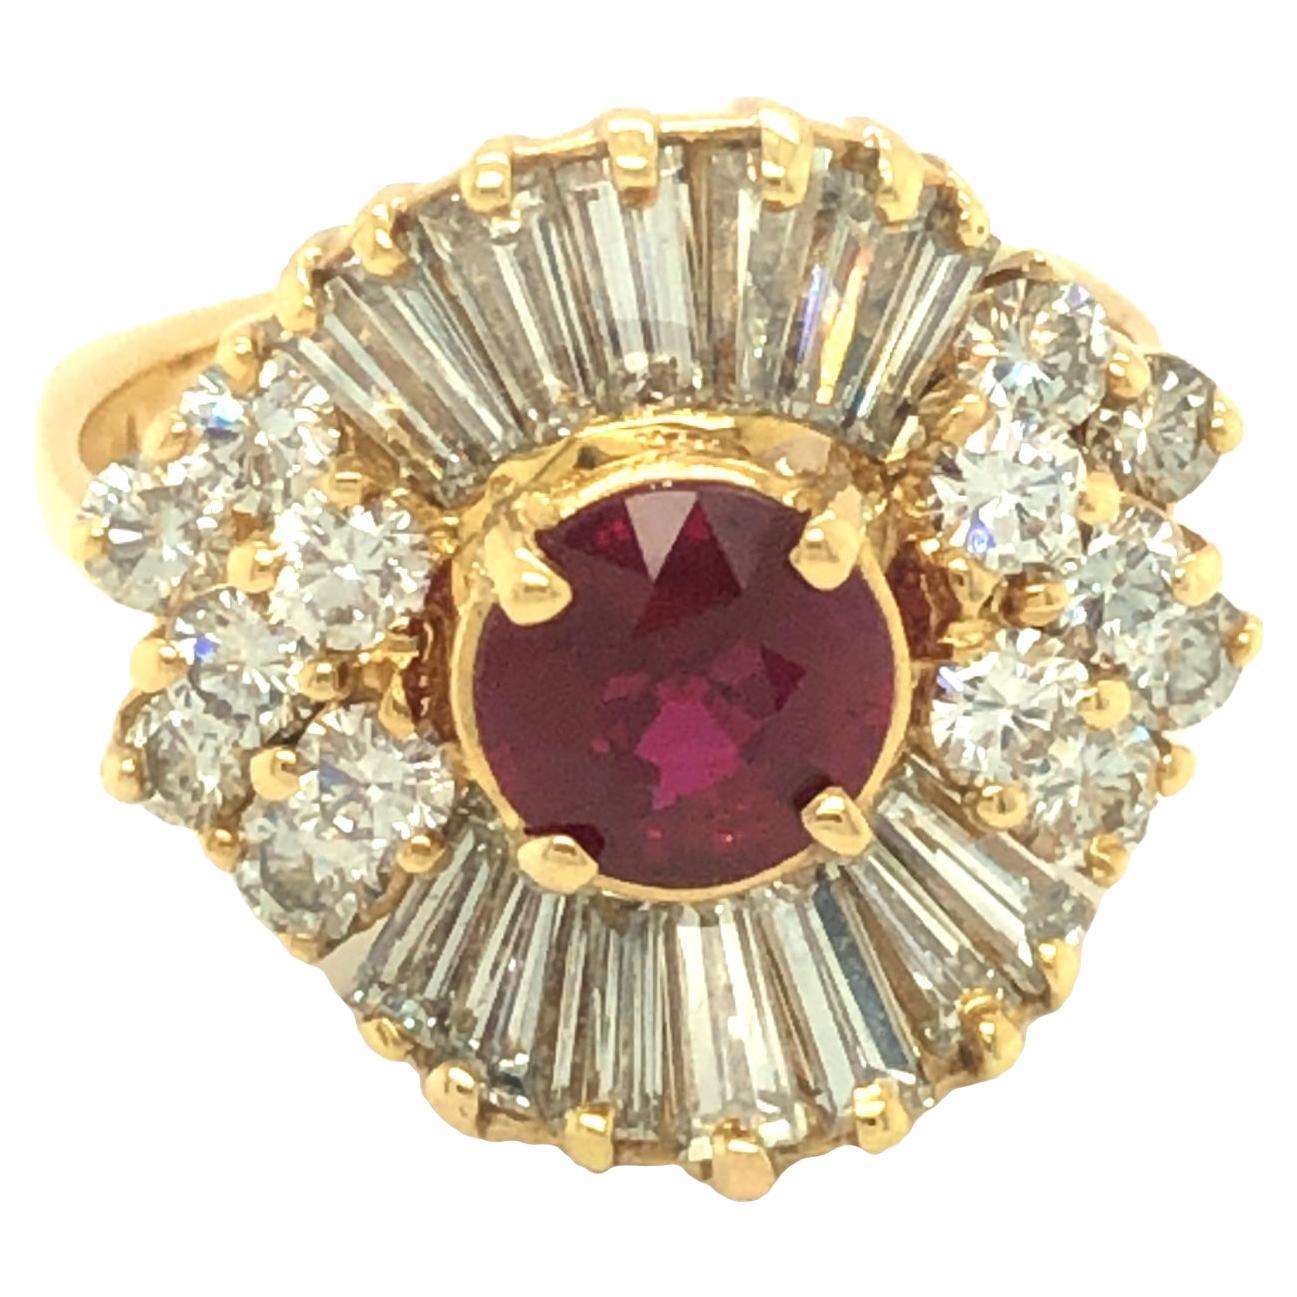 GIA Certified Burma Ruby and Diamond Ballerina Ring 18k Yellow Gold